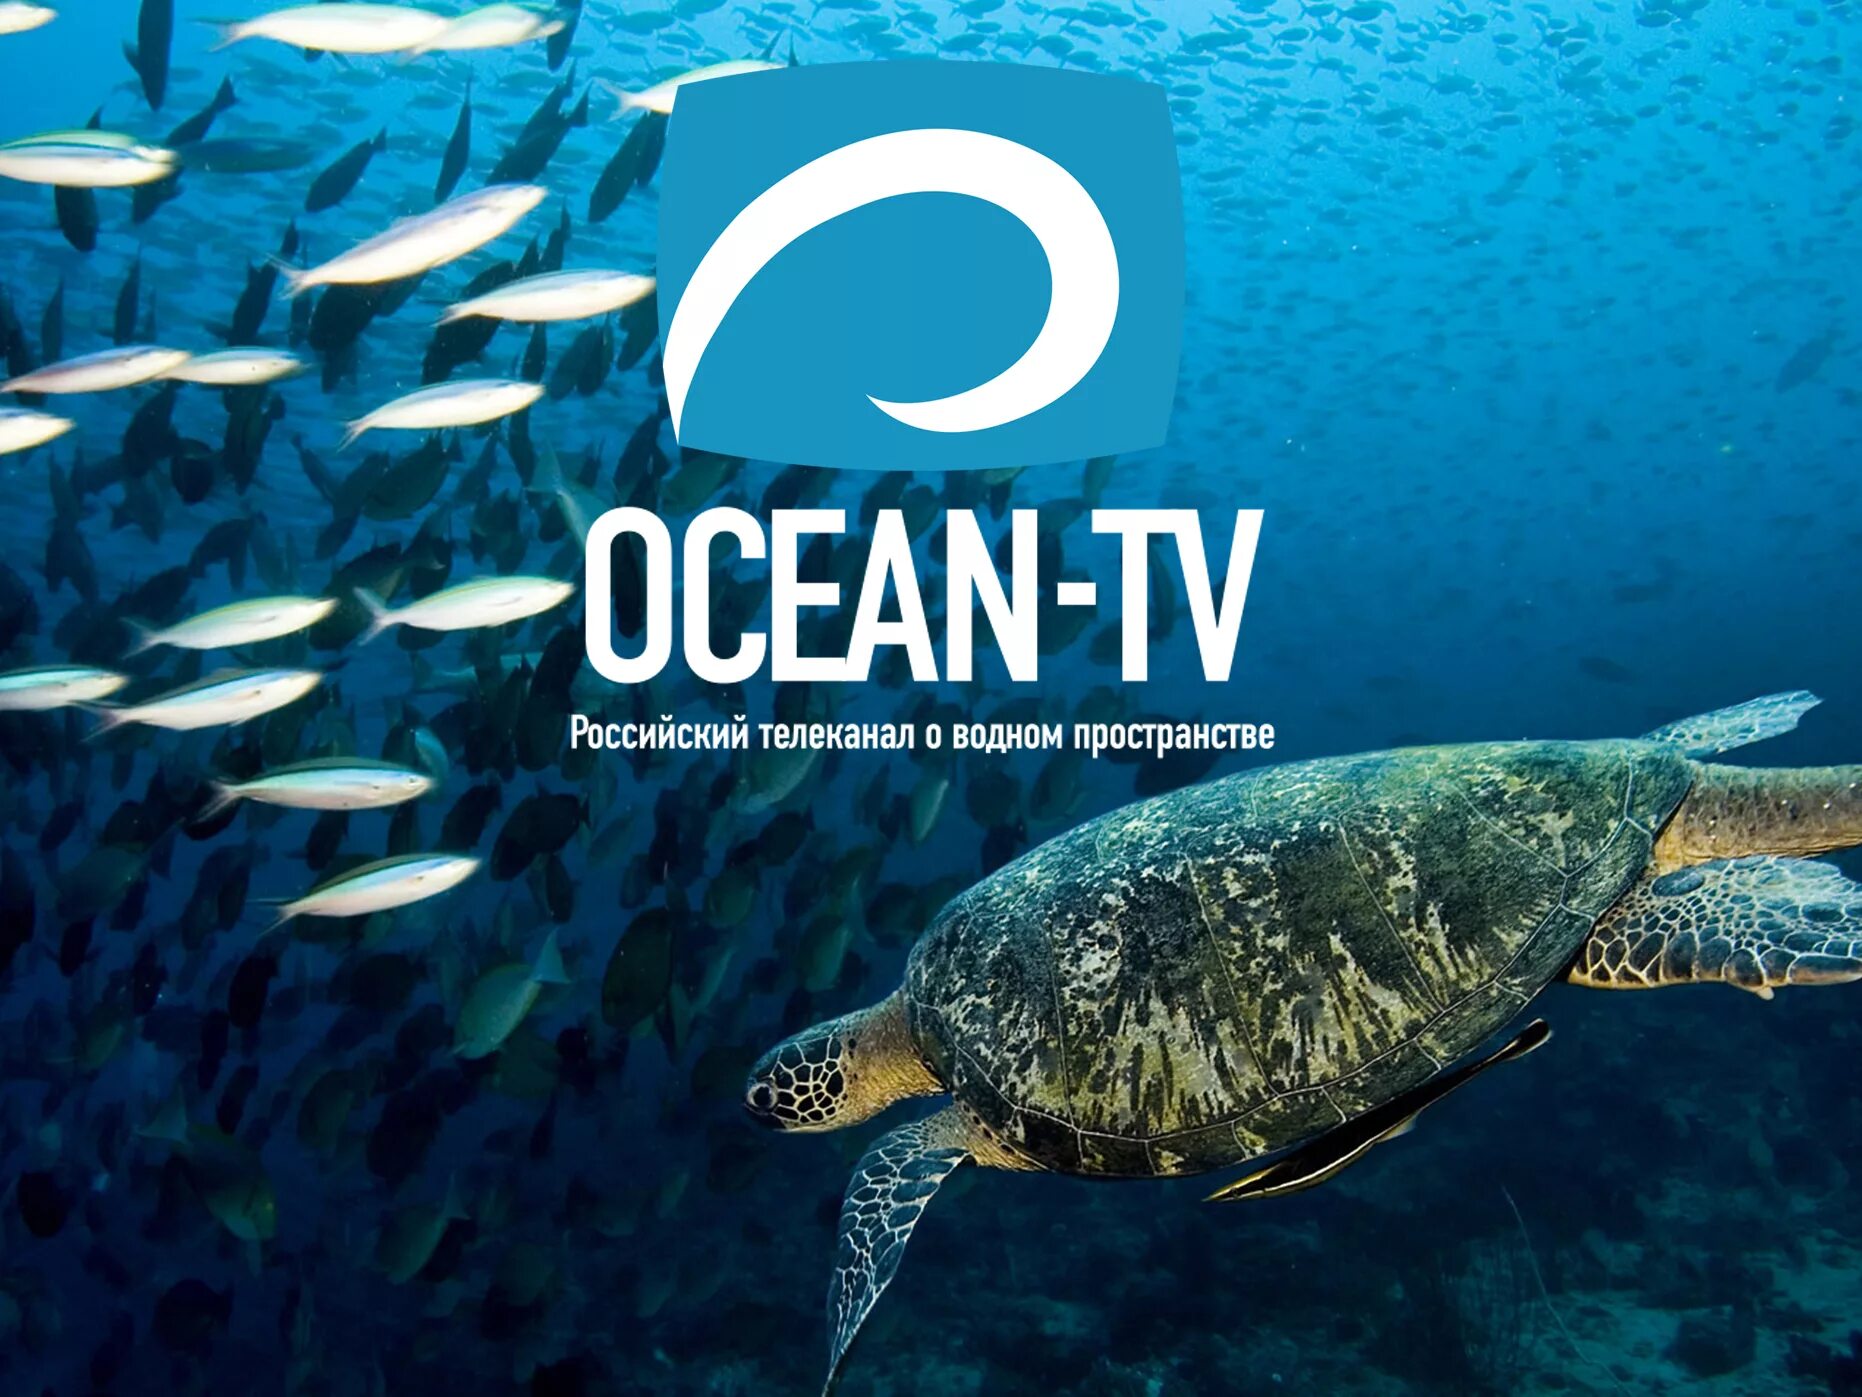 Океан ТВ. Океан ТВ логотип. Каналы в океане. Морской Телеканал. Ocean channel